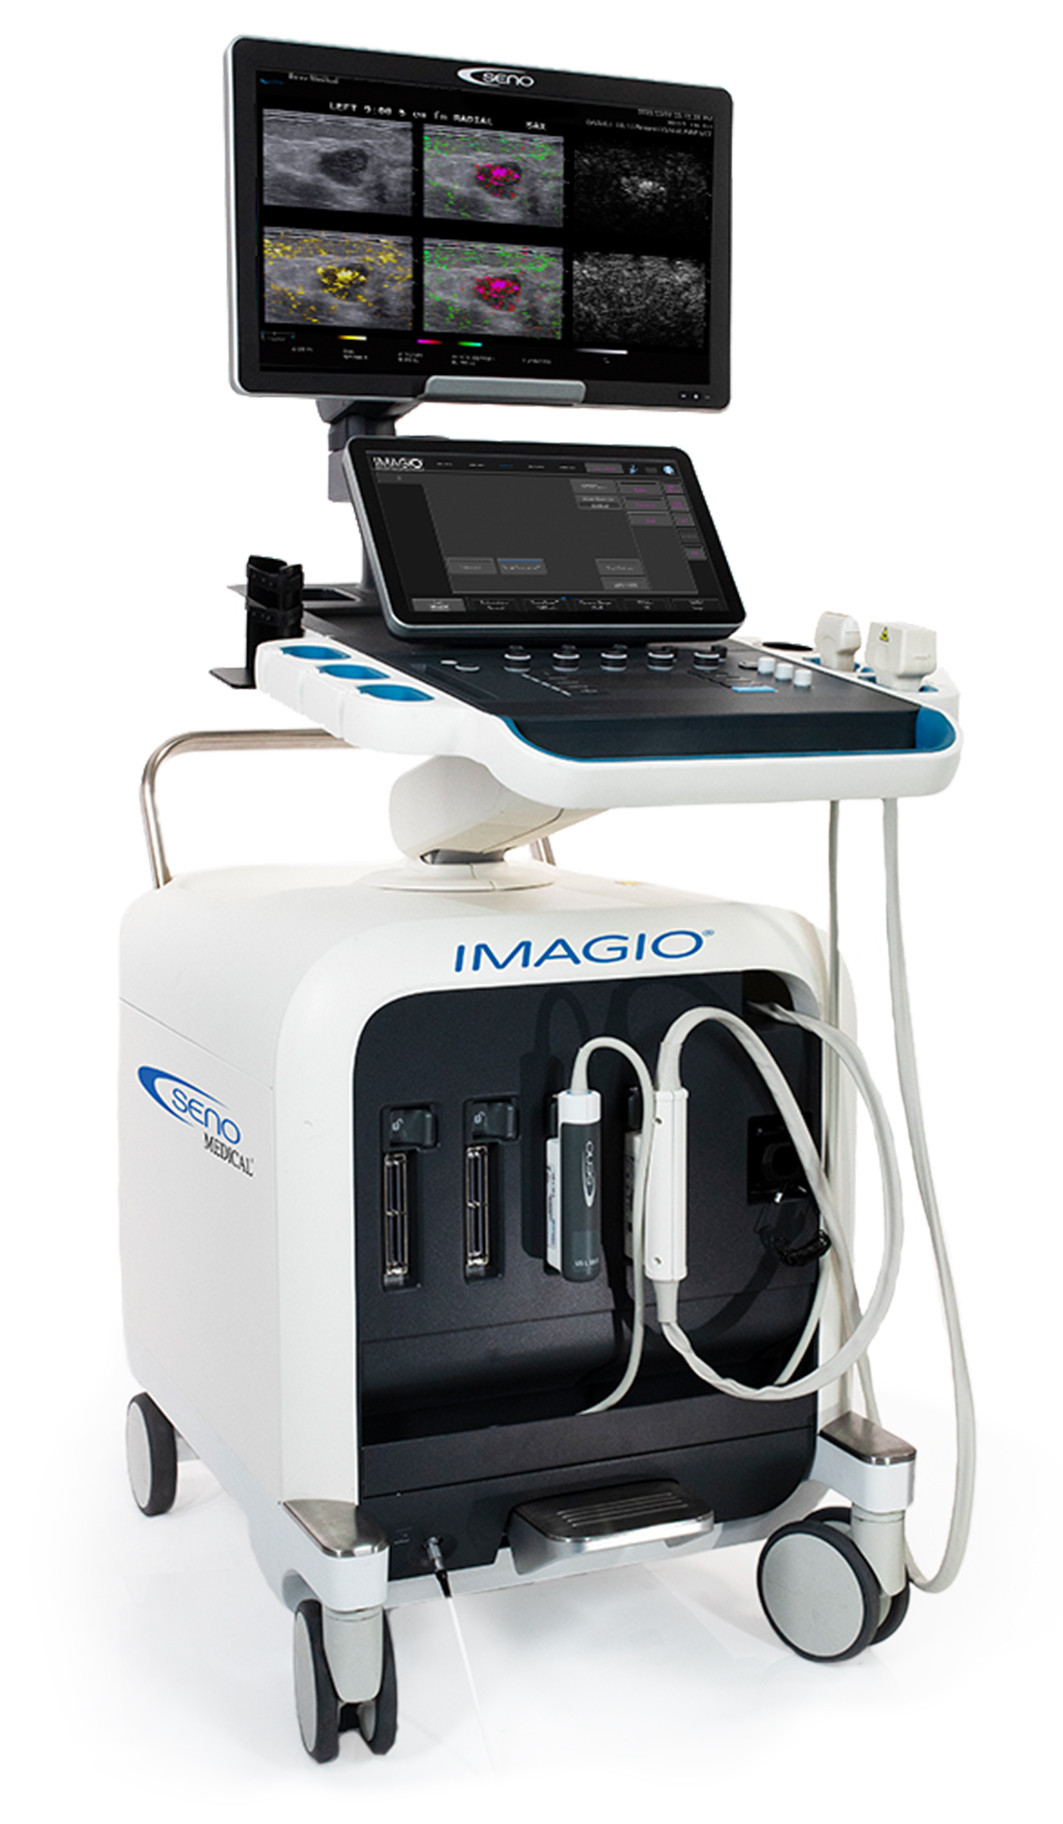 Imagio® OA/US Breast Imaging System Full Image